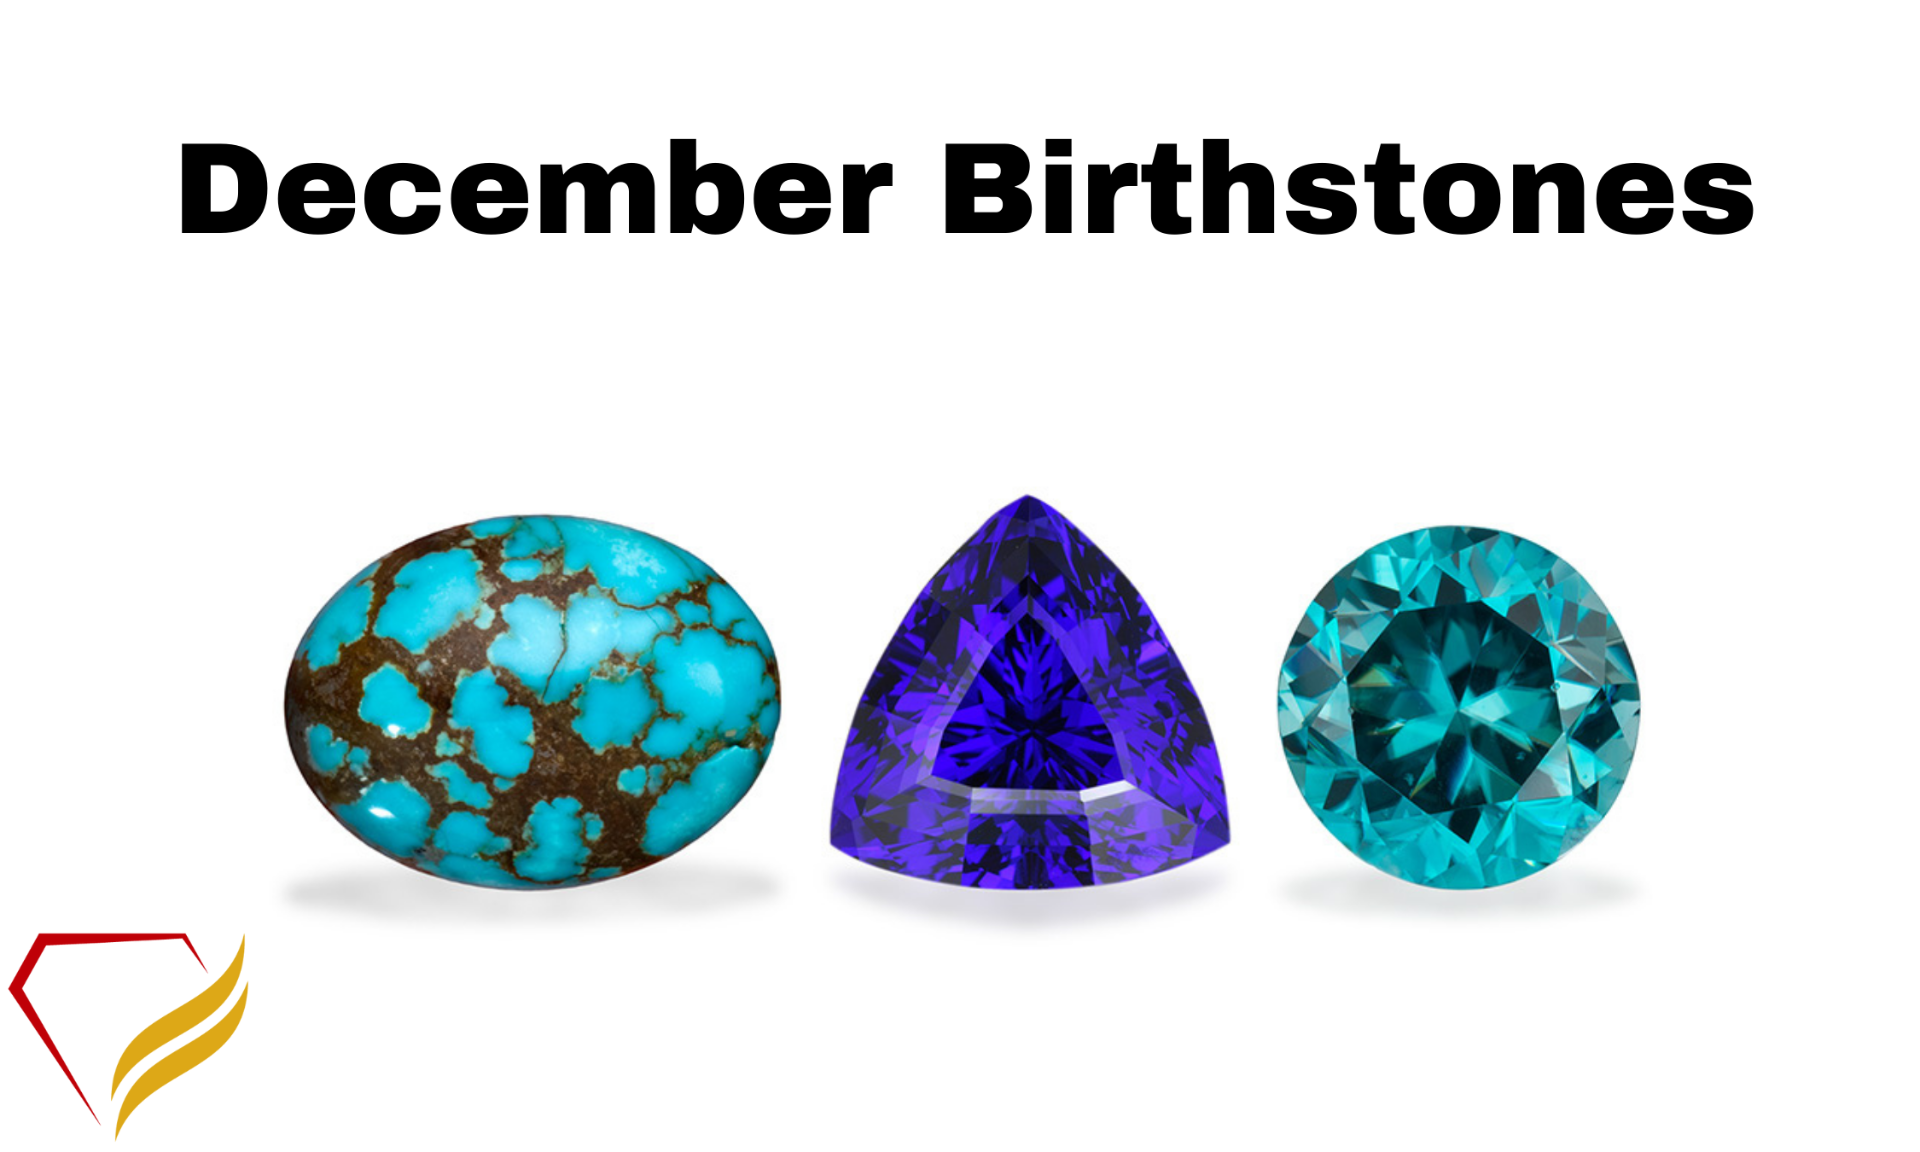 December birthstones